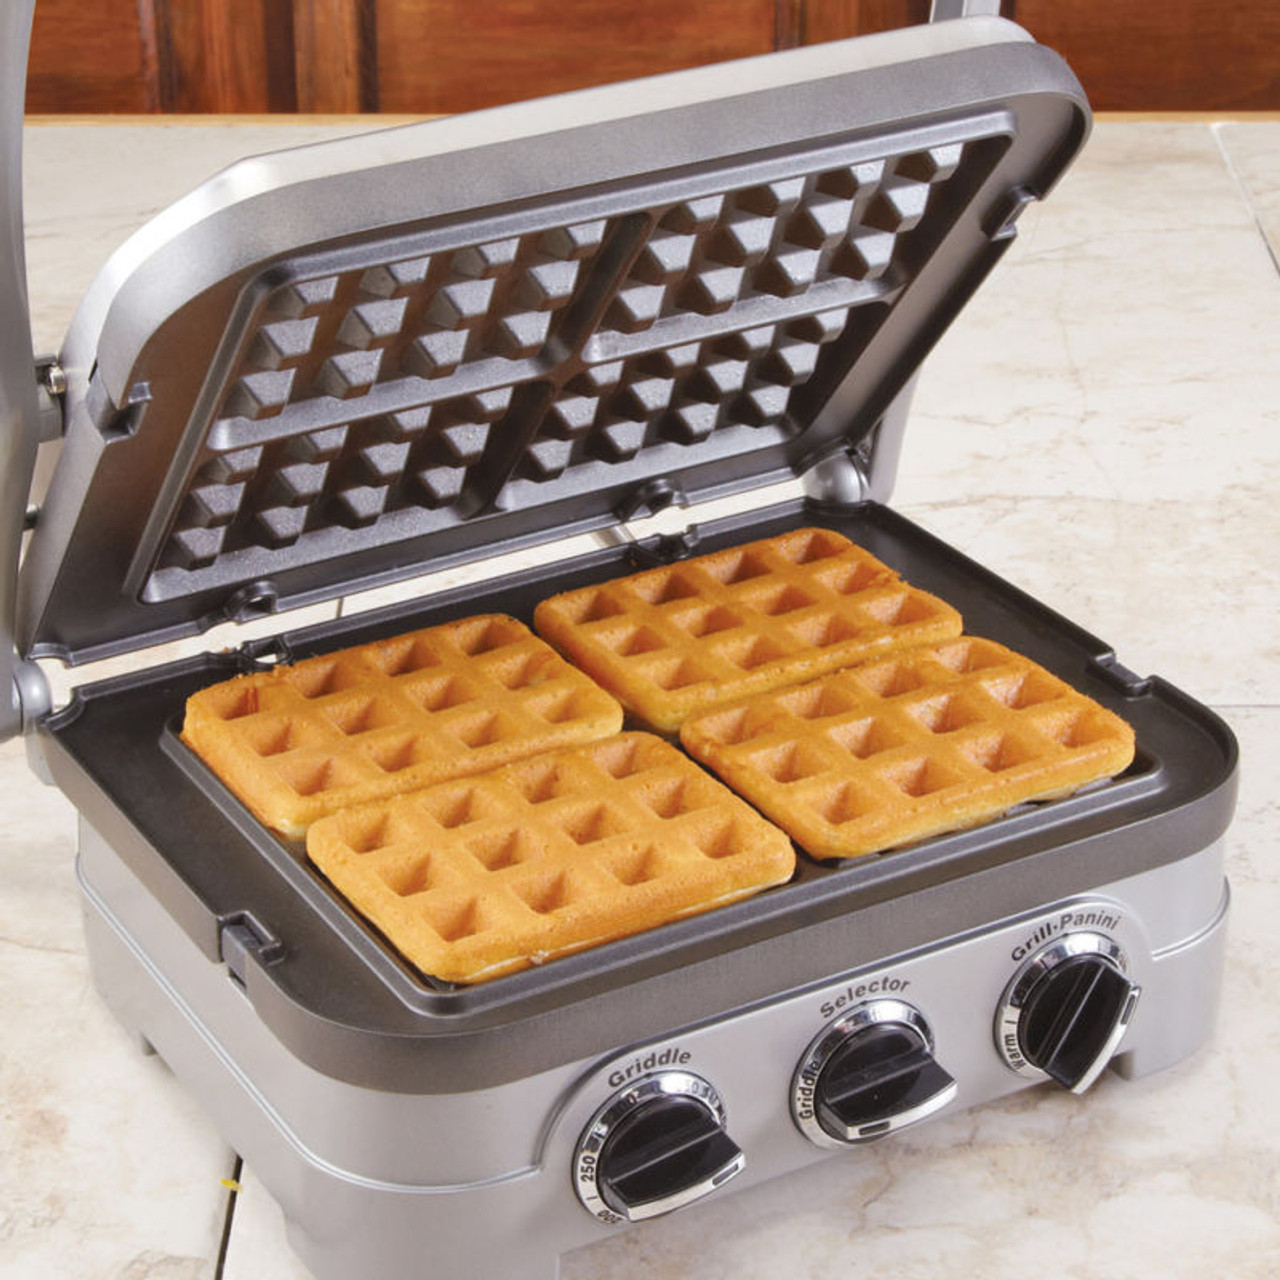 Cuisinart Home Liege Waffle Maker and Griddler GR-5B